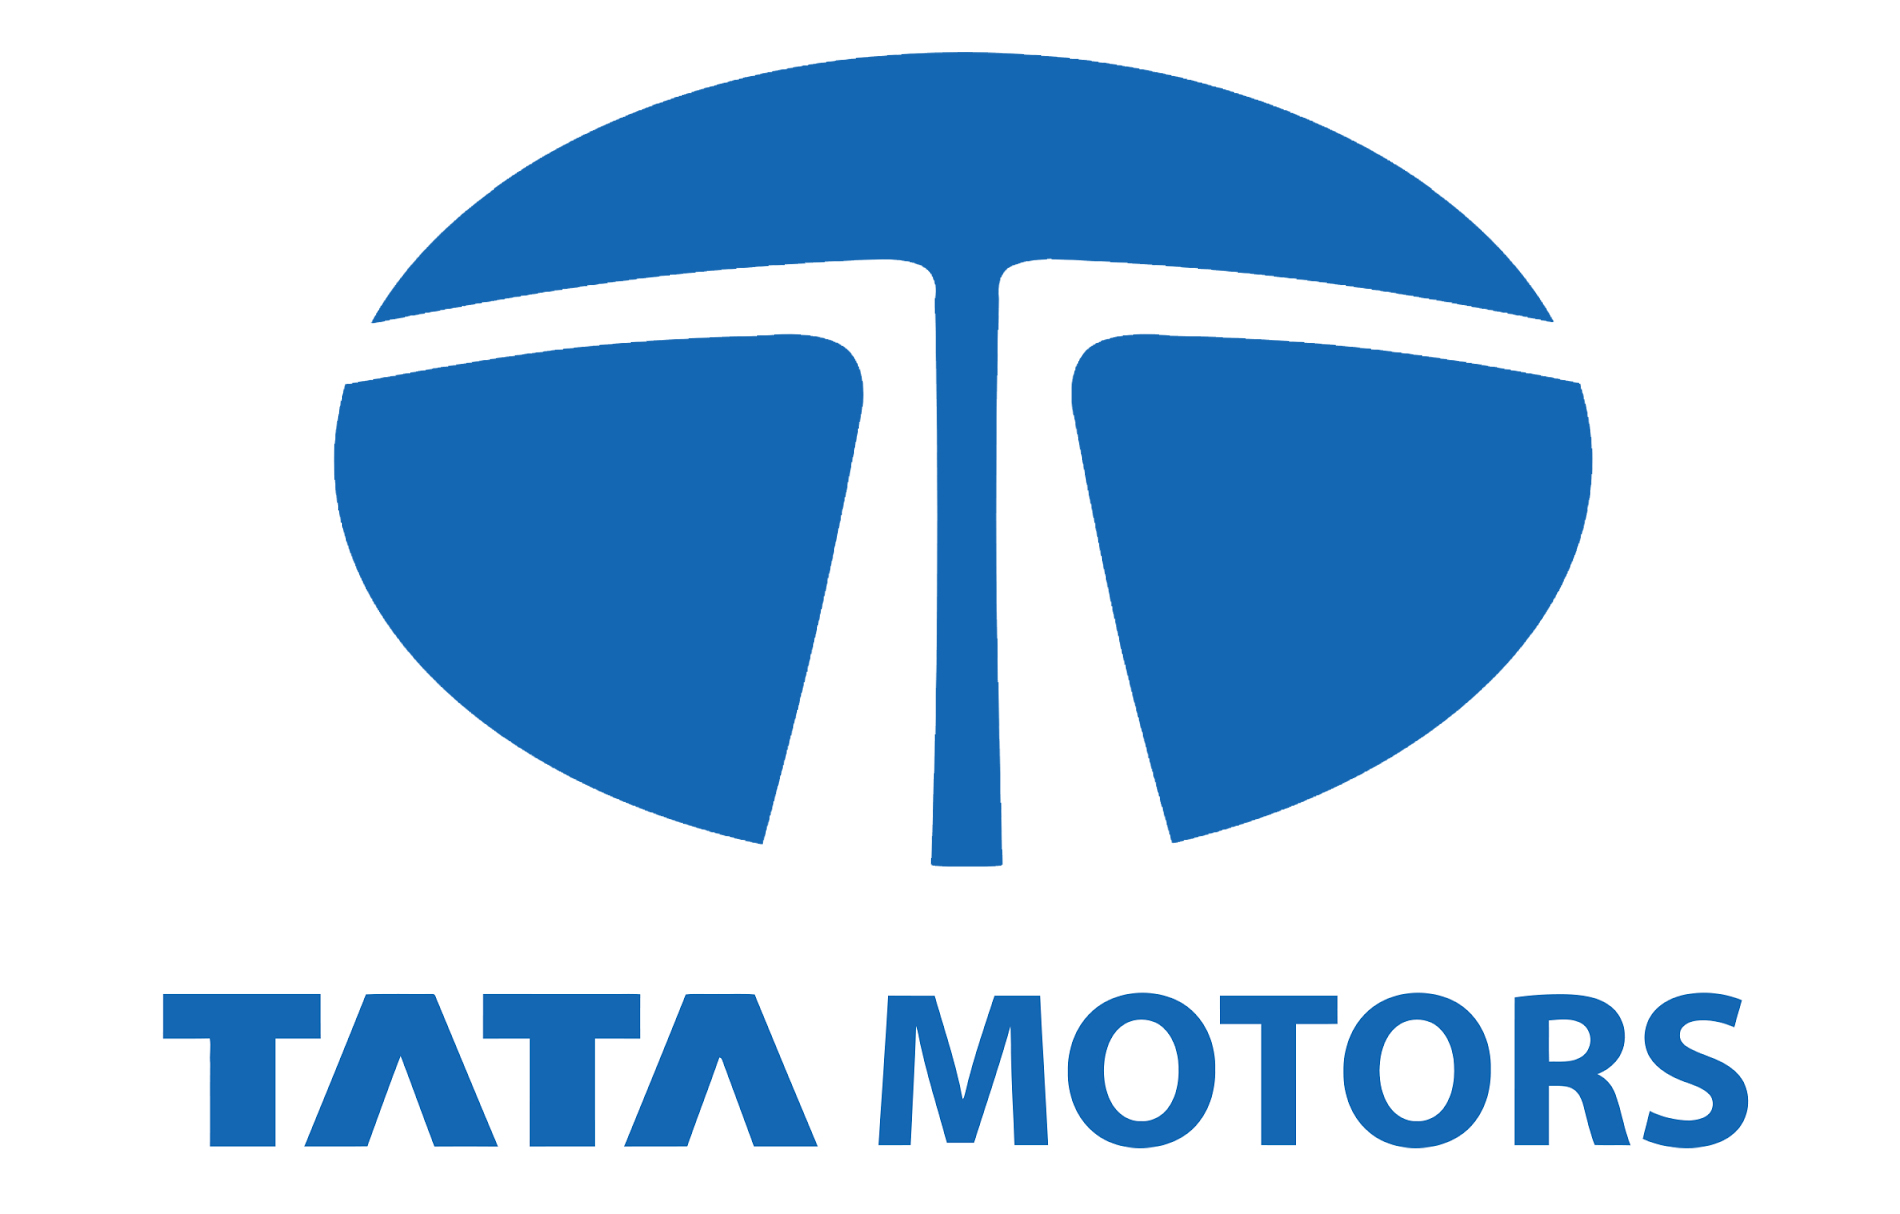 Tata Motors Cars Showroom and Workshop - The True Sai Works|Show Room|Automotive